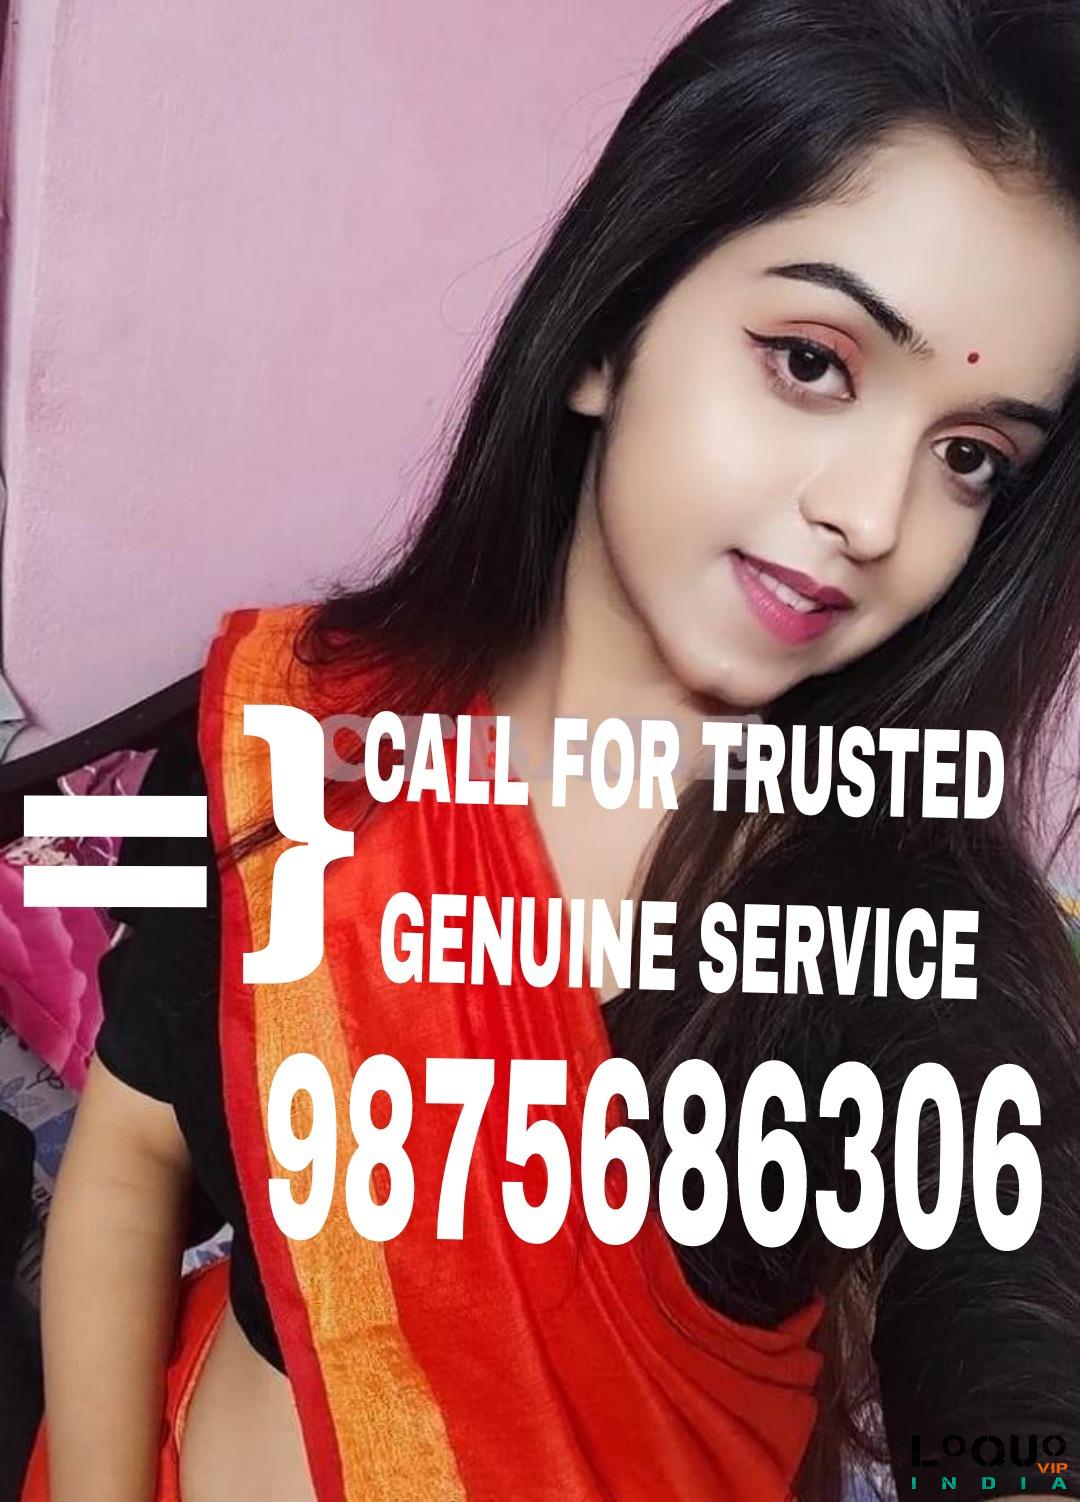 Call Girls West Bengal: ASANSOL❤CALL GIRL 98756*86306 ❤CALL GIRLS IN ESCORT SERVICE❤